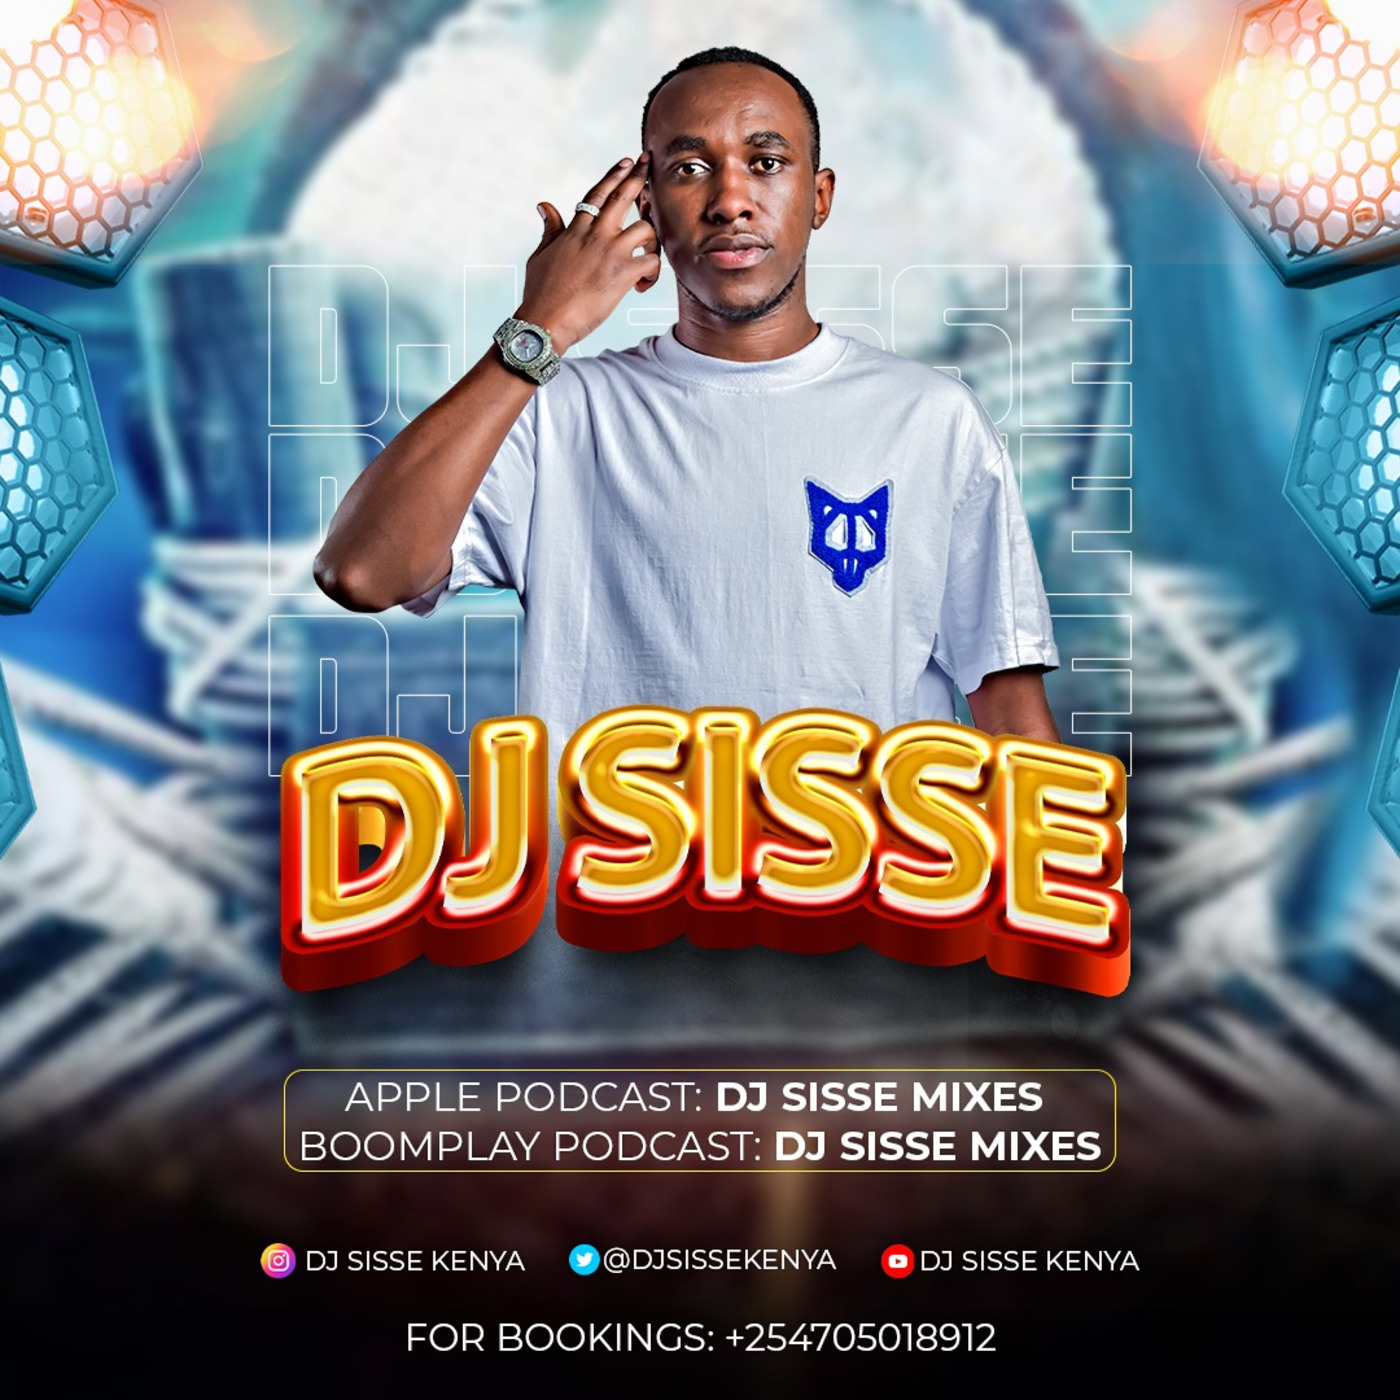 DJ SISSE - RANDOM MIX 1 (CLUB BANGER)